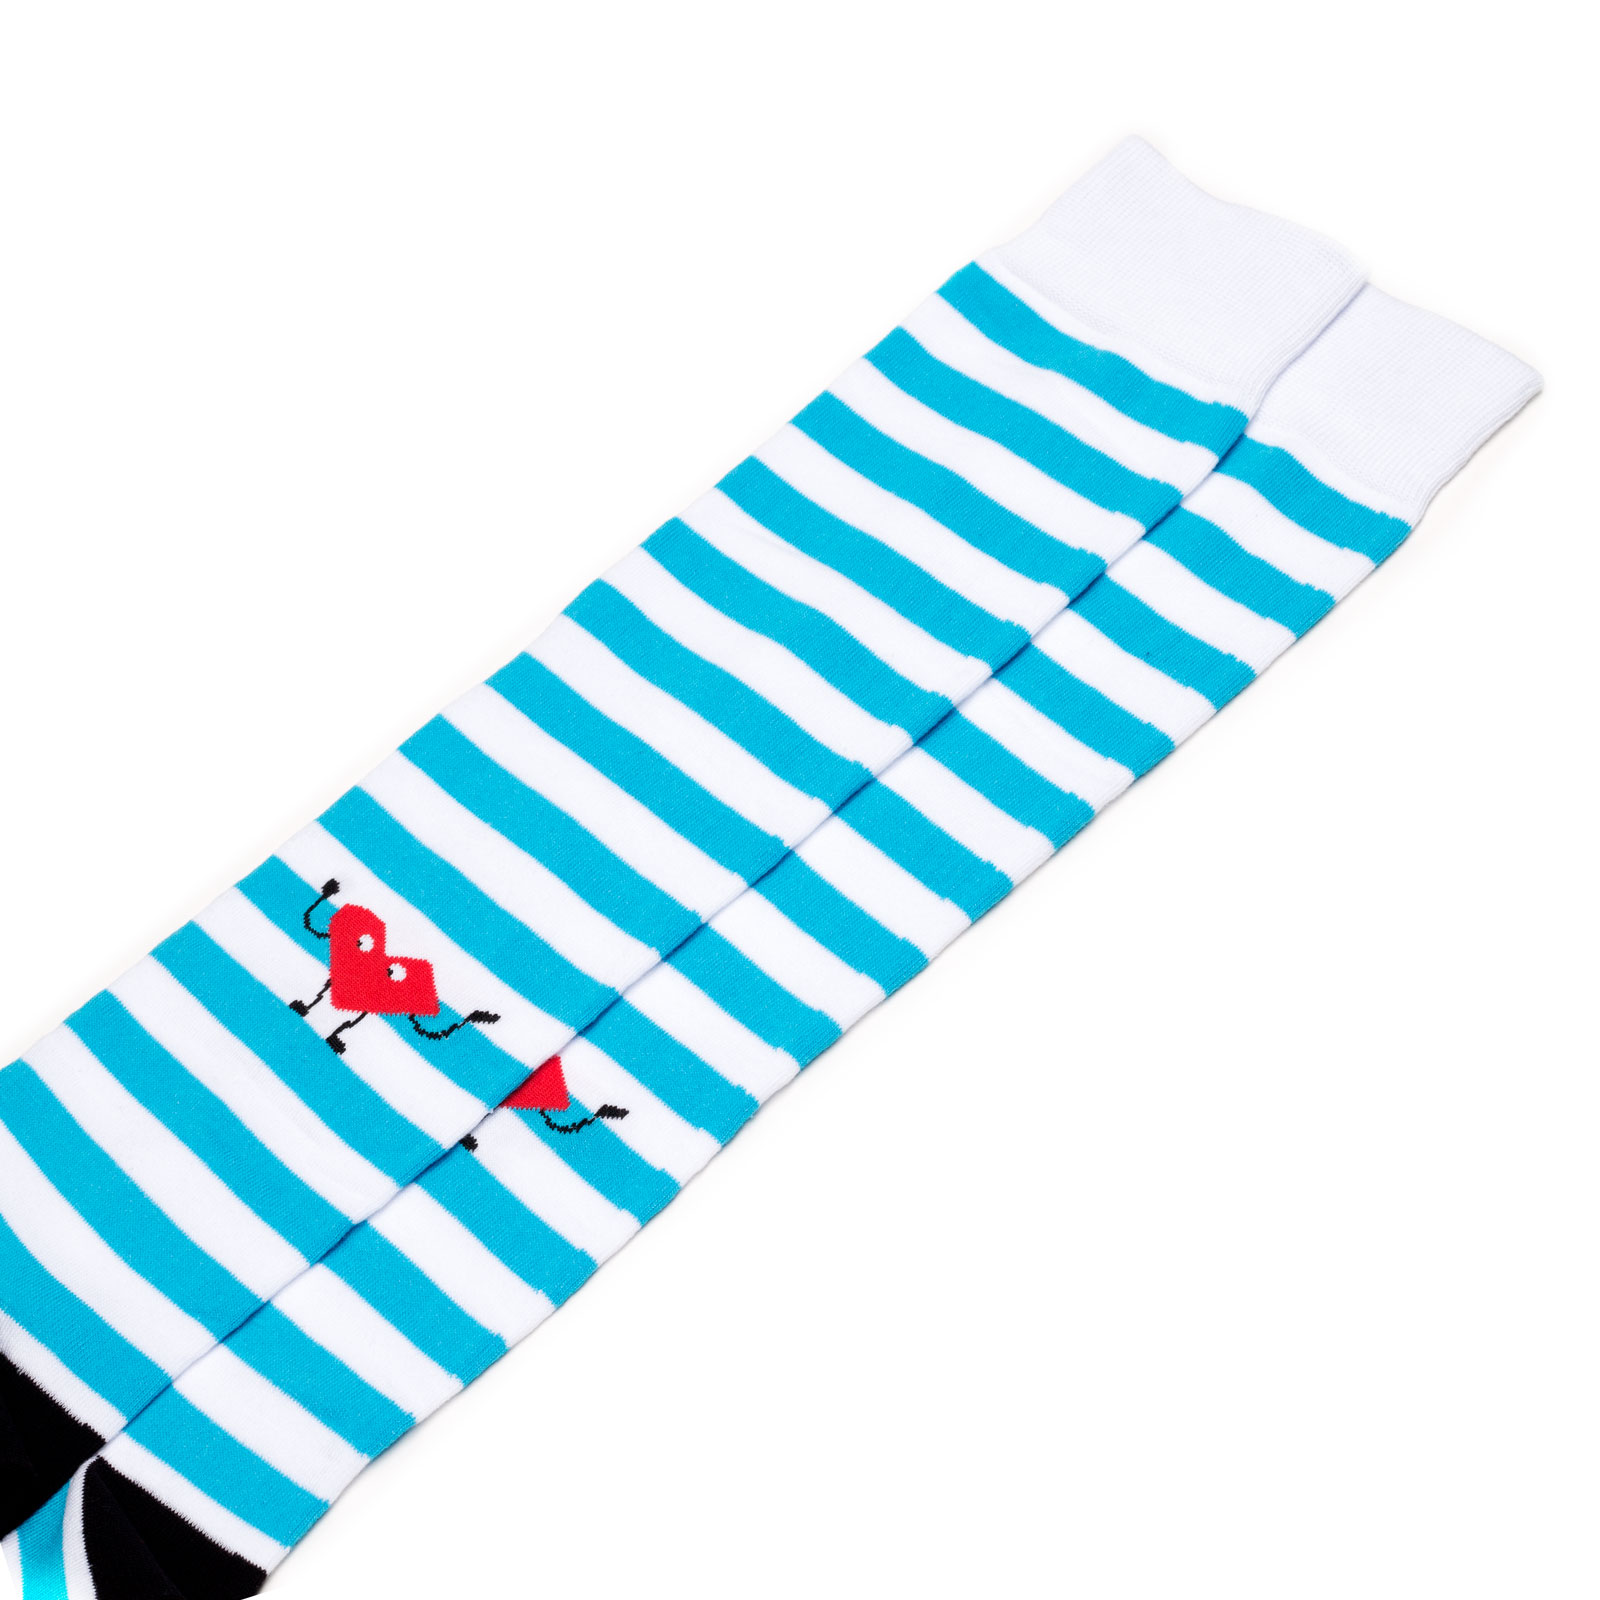 Гольфы унисекс St. Friday Socks Classic Stripes голубые 38-41